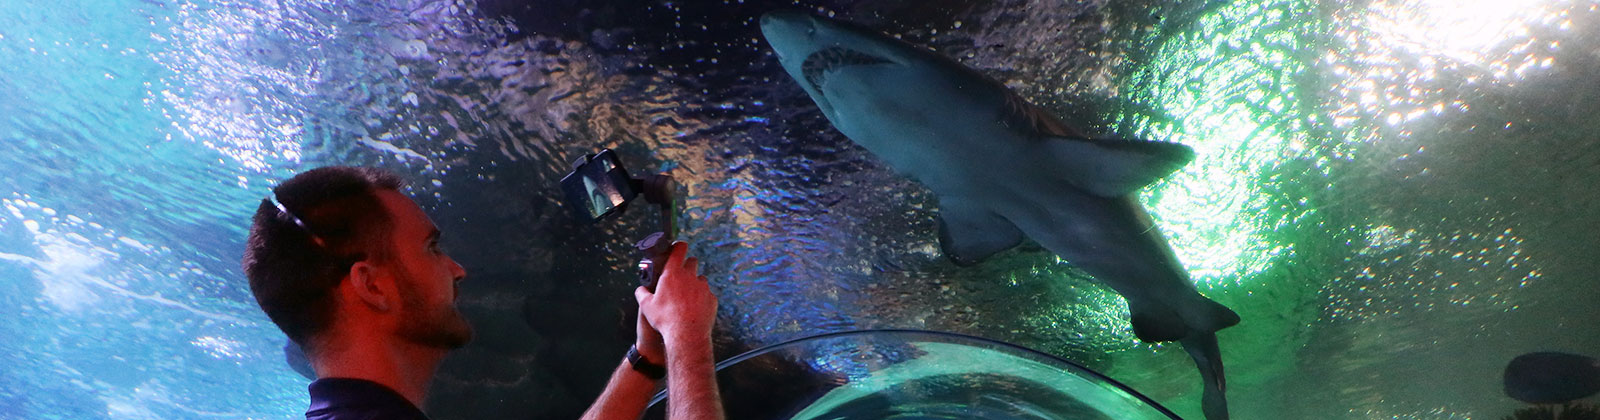 Greater Cleveland Aquarium educator pointing a camera at a sandtiger shark.